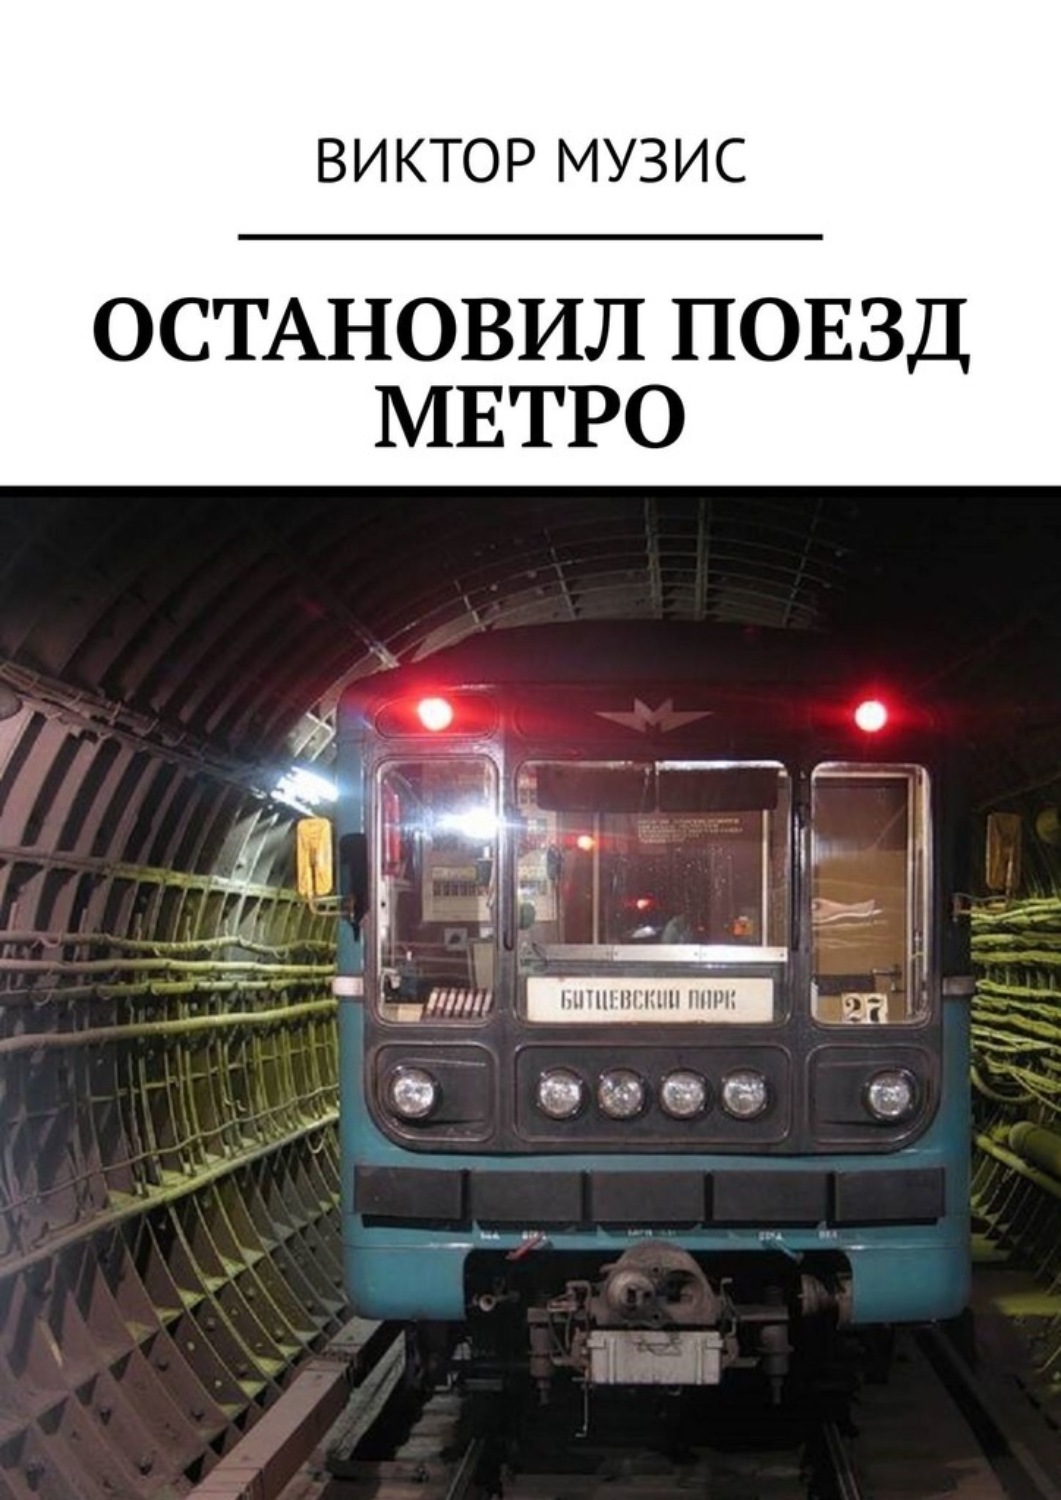 поезд метро еж